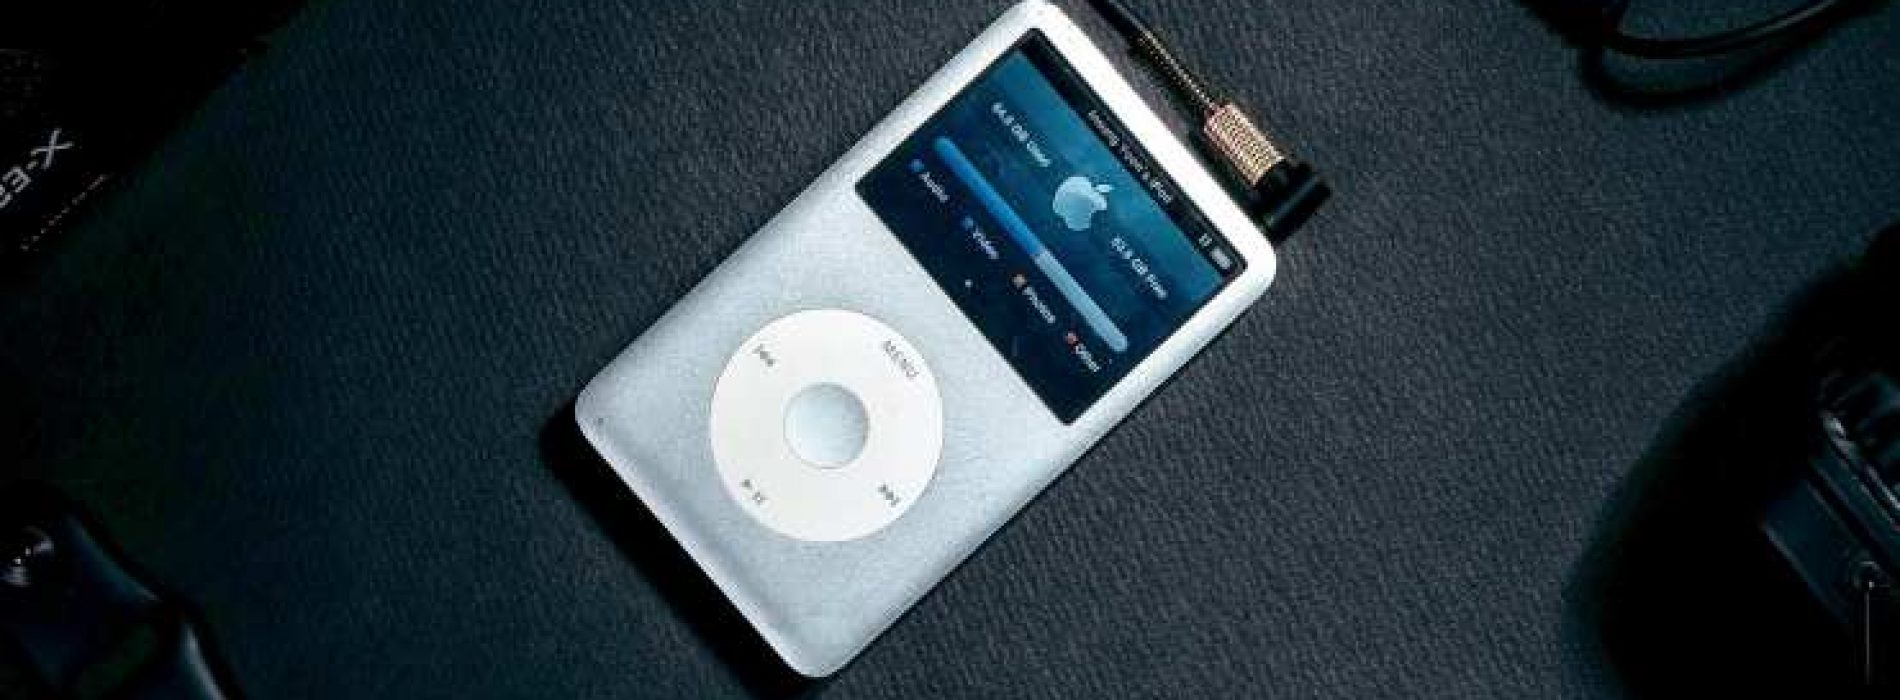 Una app llena de nostalgia pretende convertir tu iPhone en un iPod con click wheel